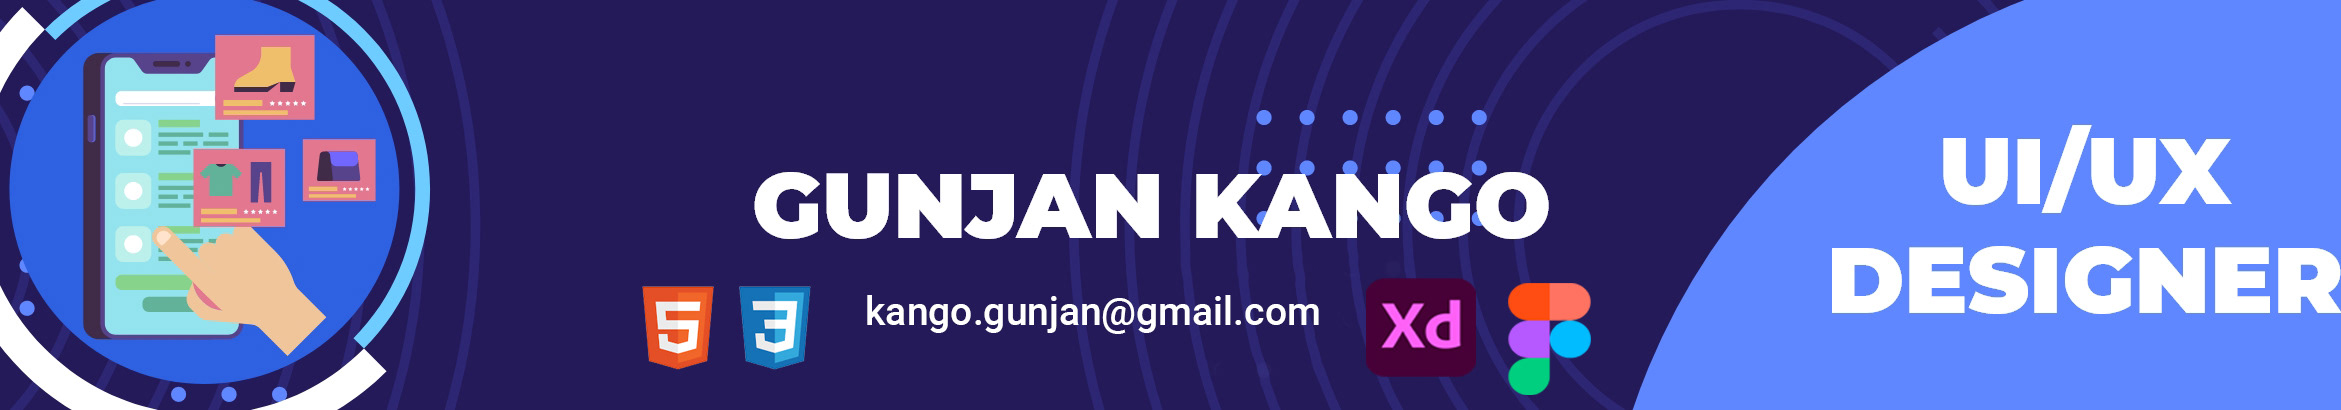 Profil-Banner von Gunjan kango